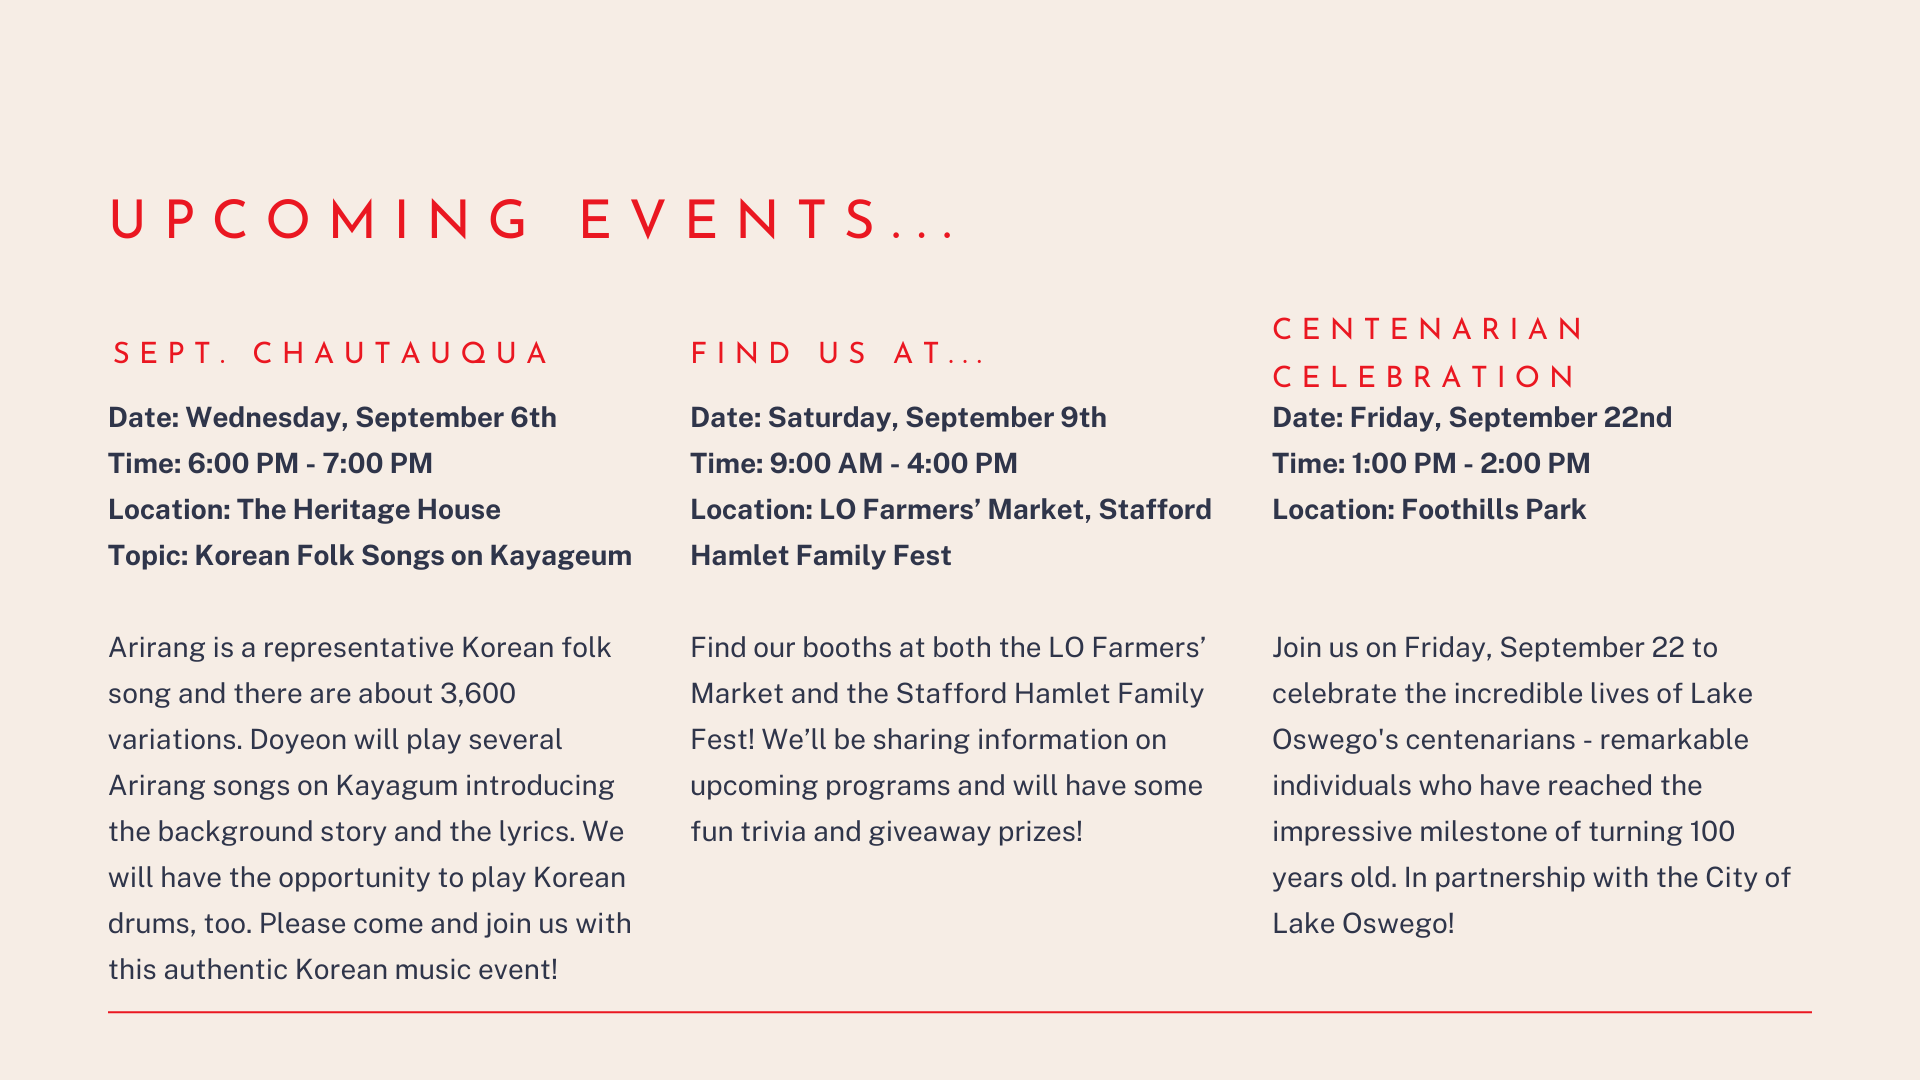 List of upcoming events, including September Chautauqua, LO Farmers' Market, Stafford Hamlet Family Fest, and Centenarian Celebration